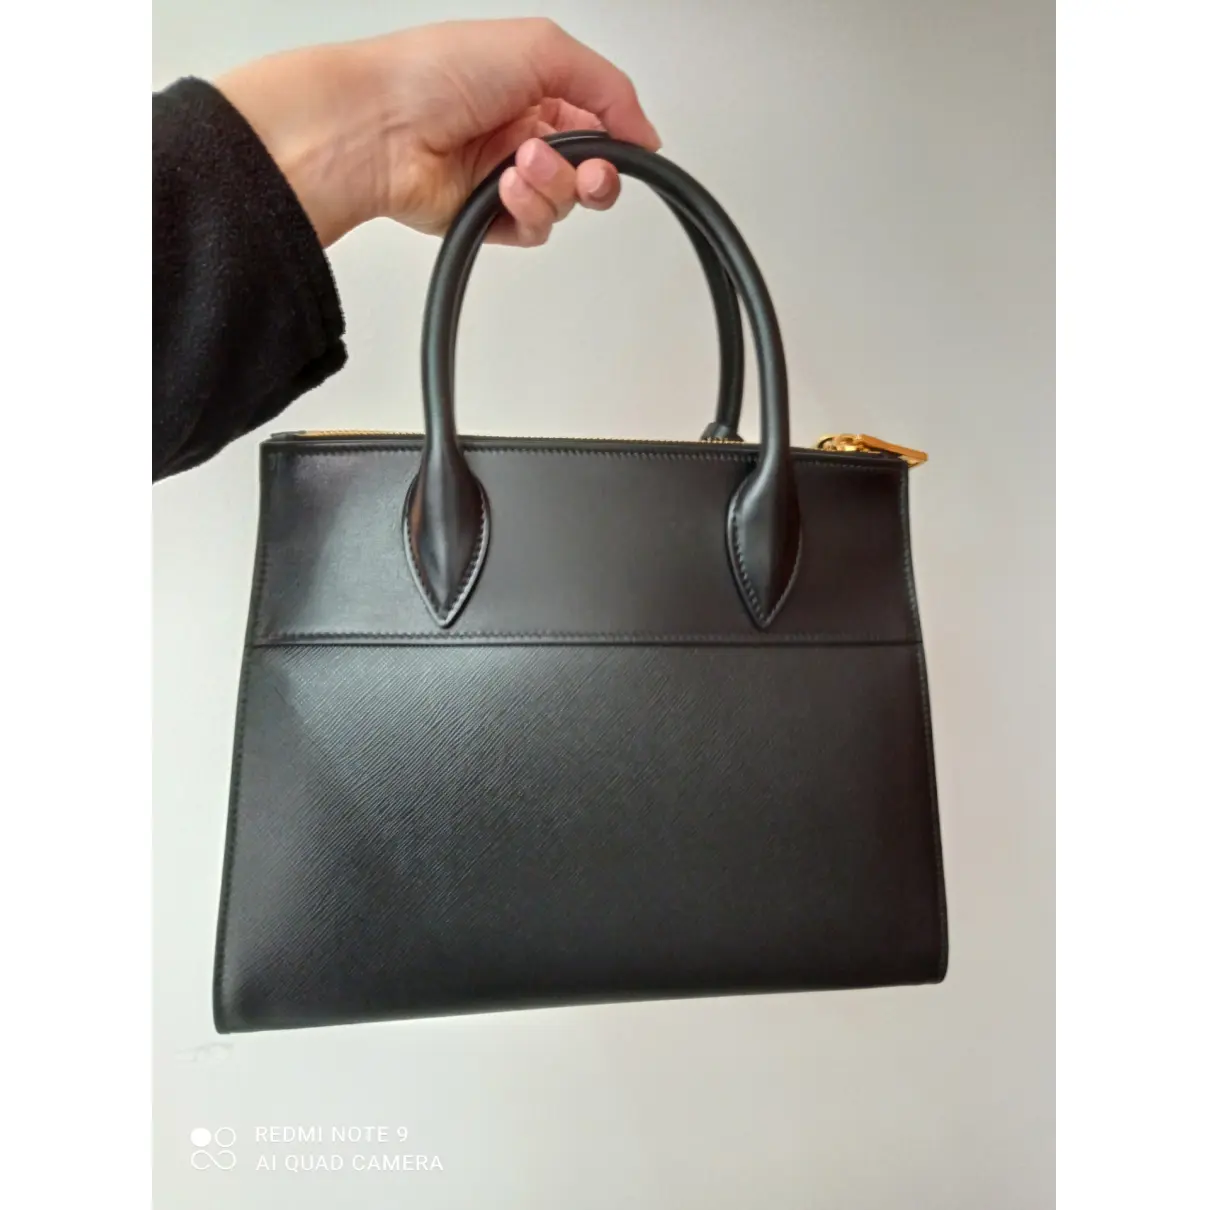 Buy Prada Paradigme leather handbag online